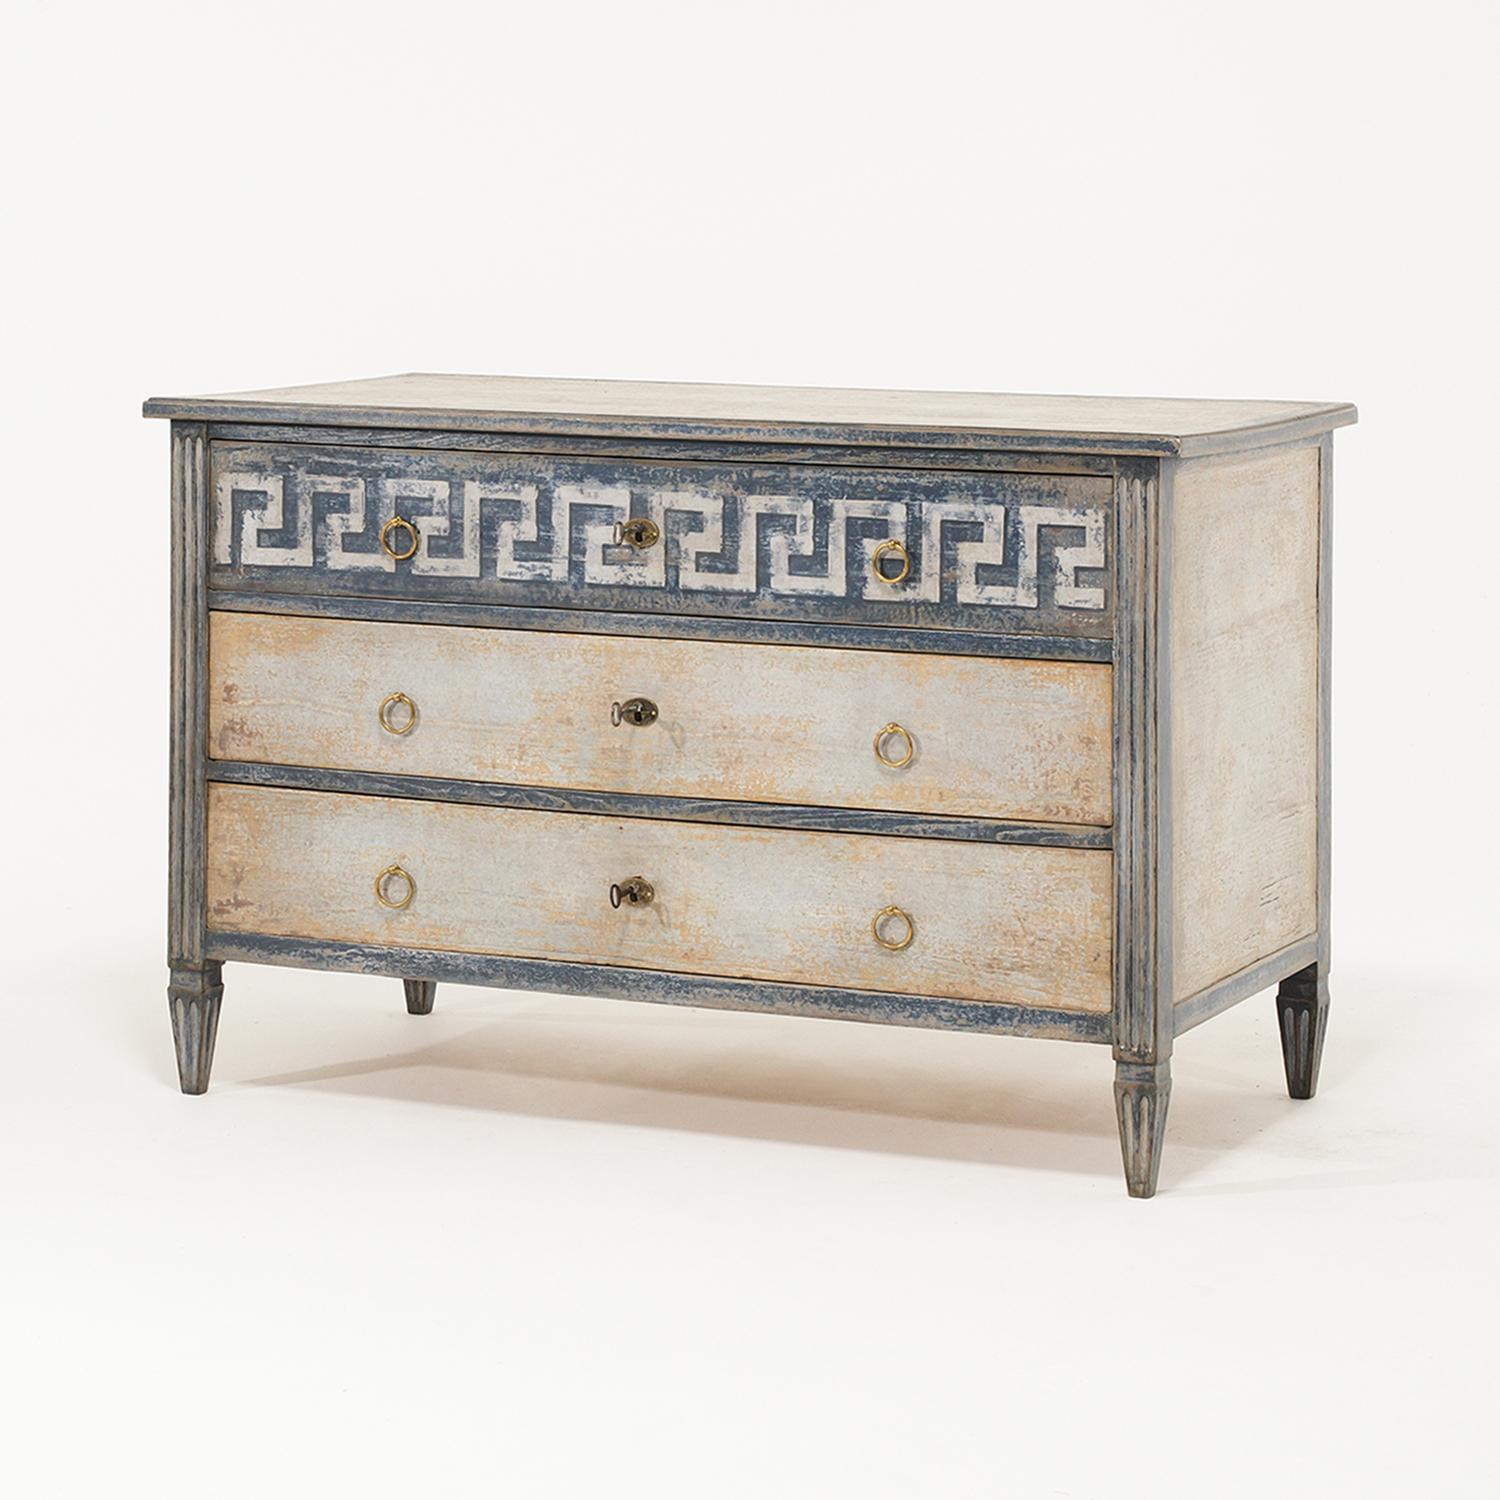 19th Century German Biedermeier Chest of Drawers - Antique Single Pine Cabinet For Sale 2